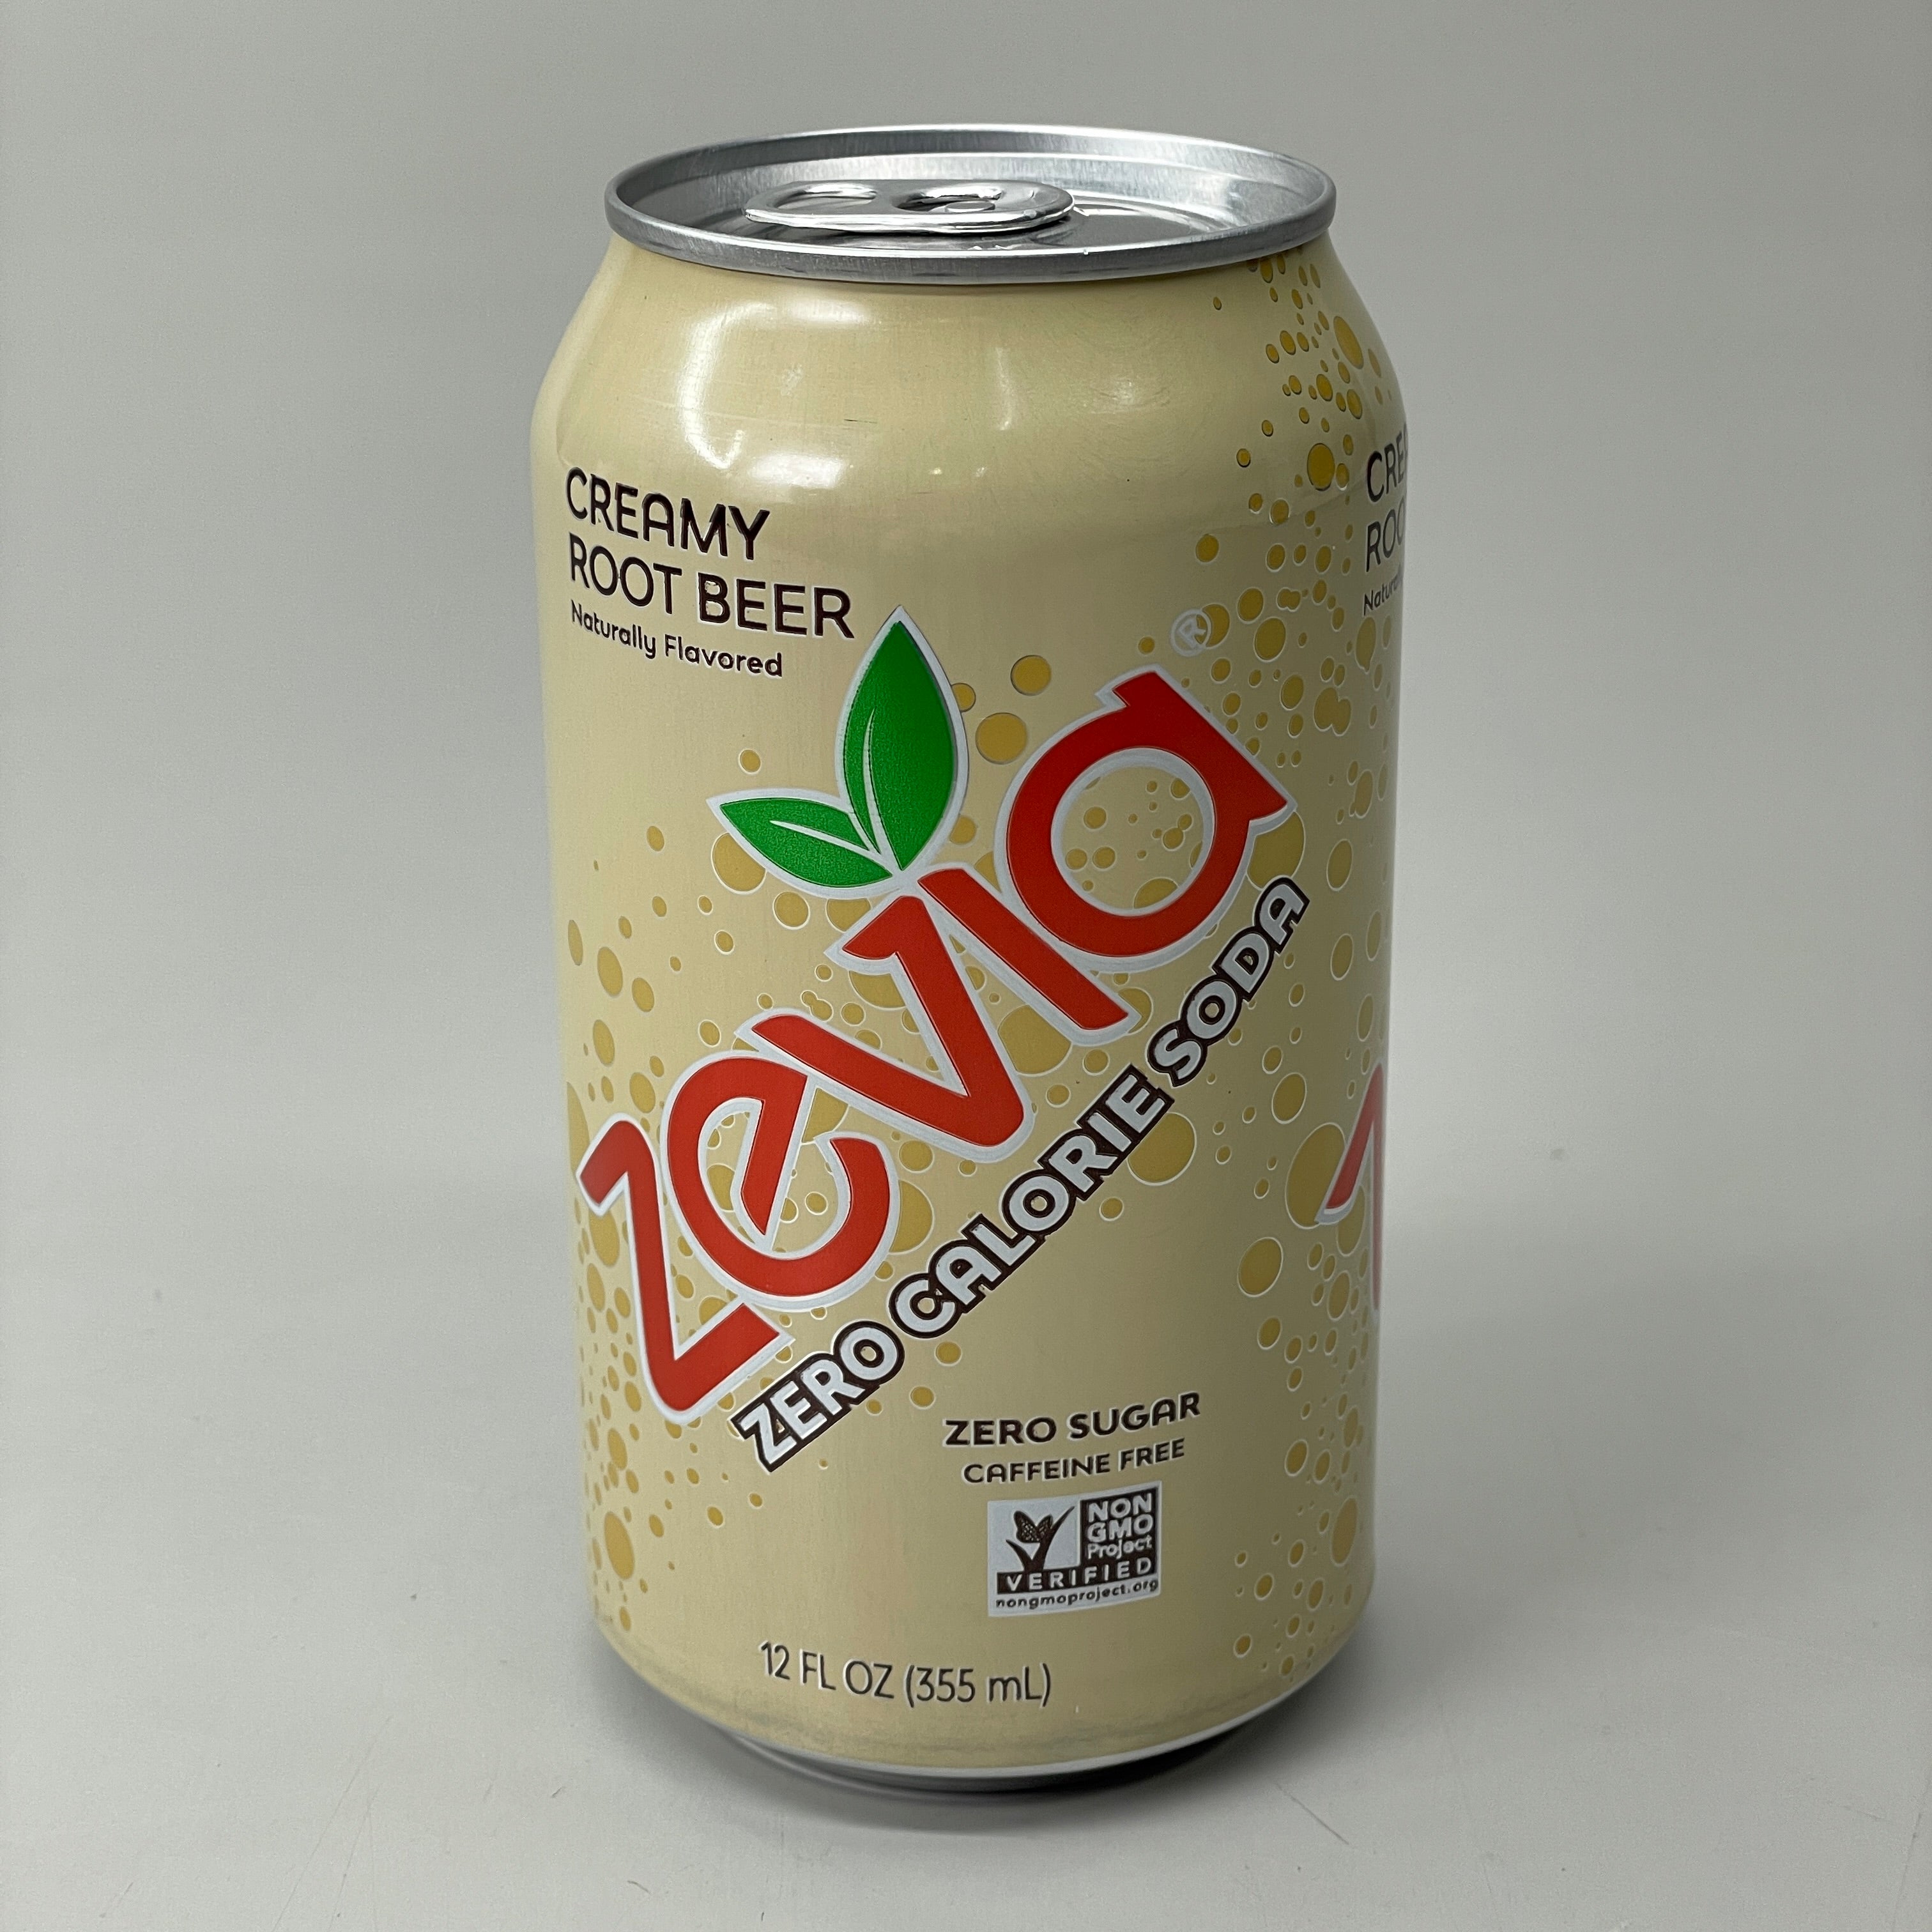 ZA@ ZEVIA 24 PACK!! Creamy Root Beer New Flavor Carbonated Beverages 12oz New Flavor (10/24) E